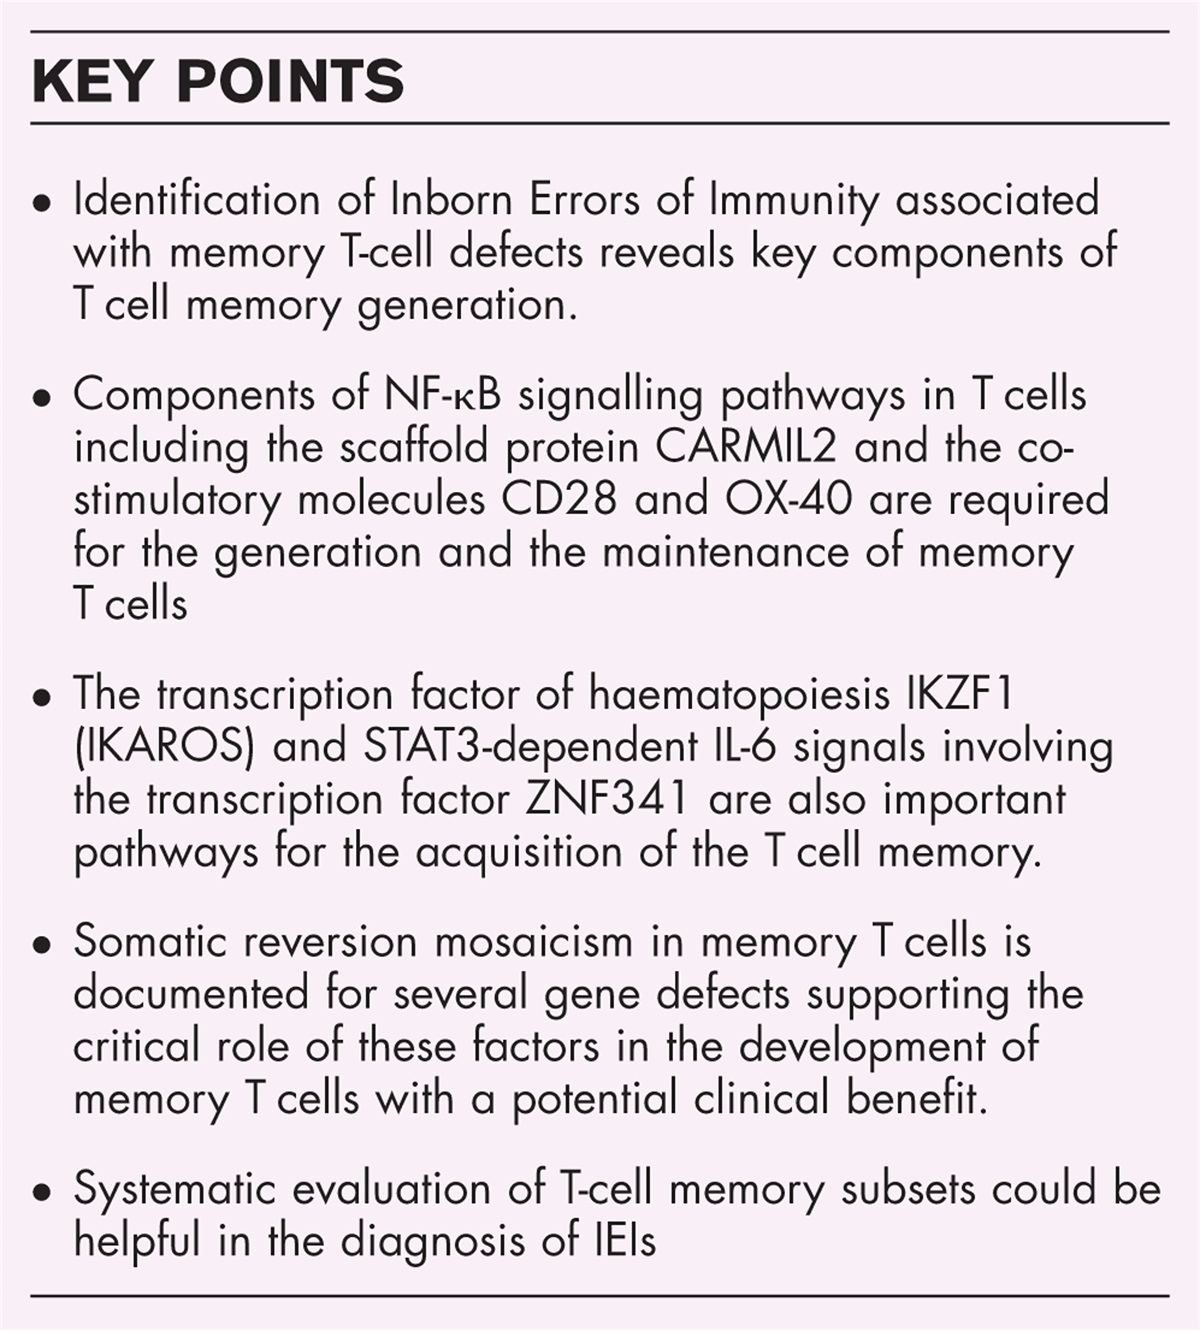 Inborn errors of immunity underlying defective T-cell memory